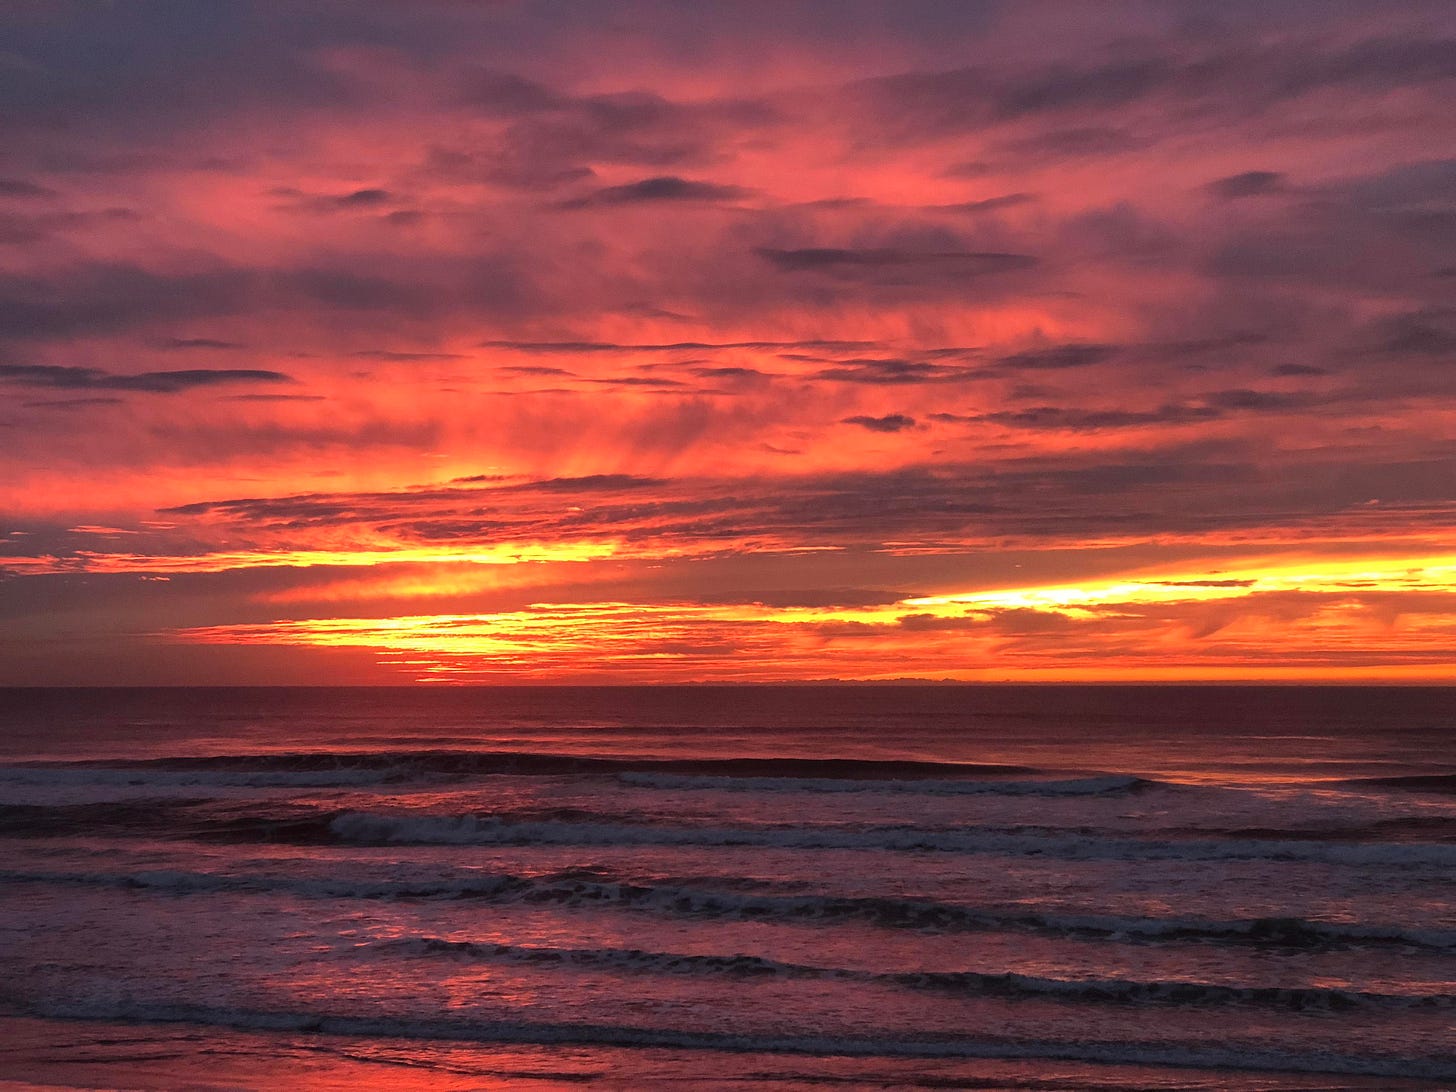 The sunset at Ocean Beach : r/sanfrancisco